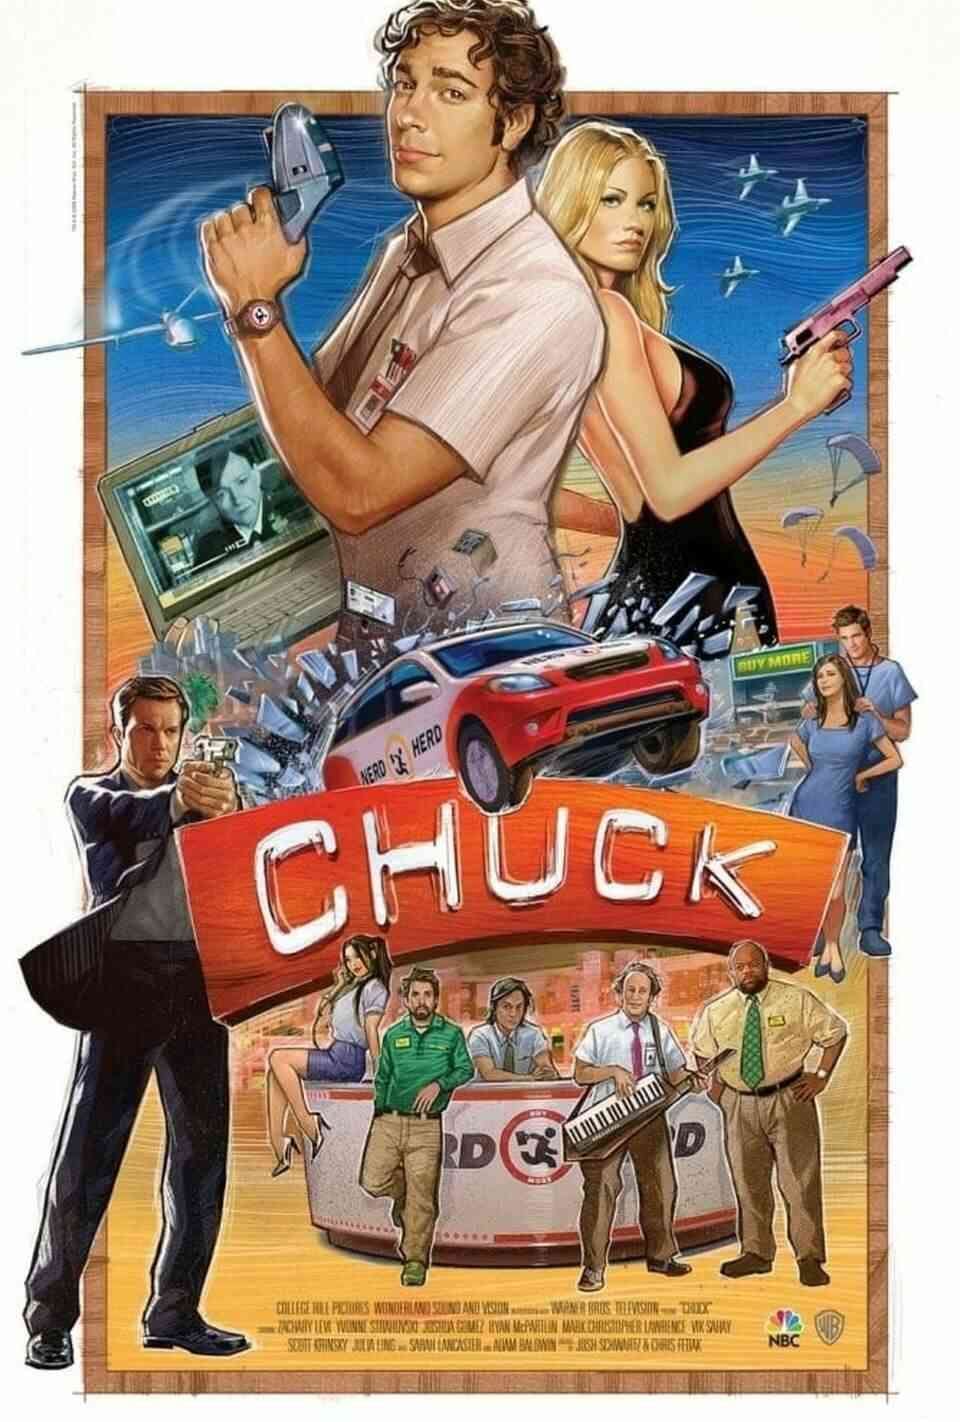 Read Chuck screenplay (poster)